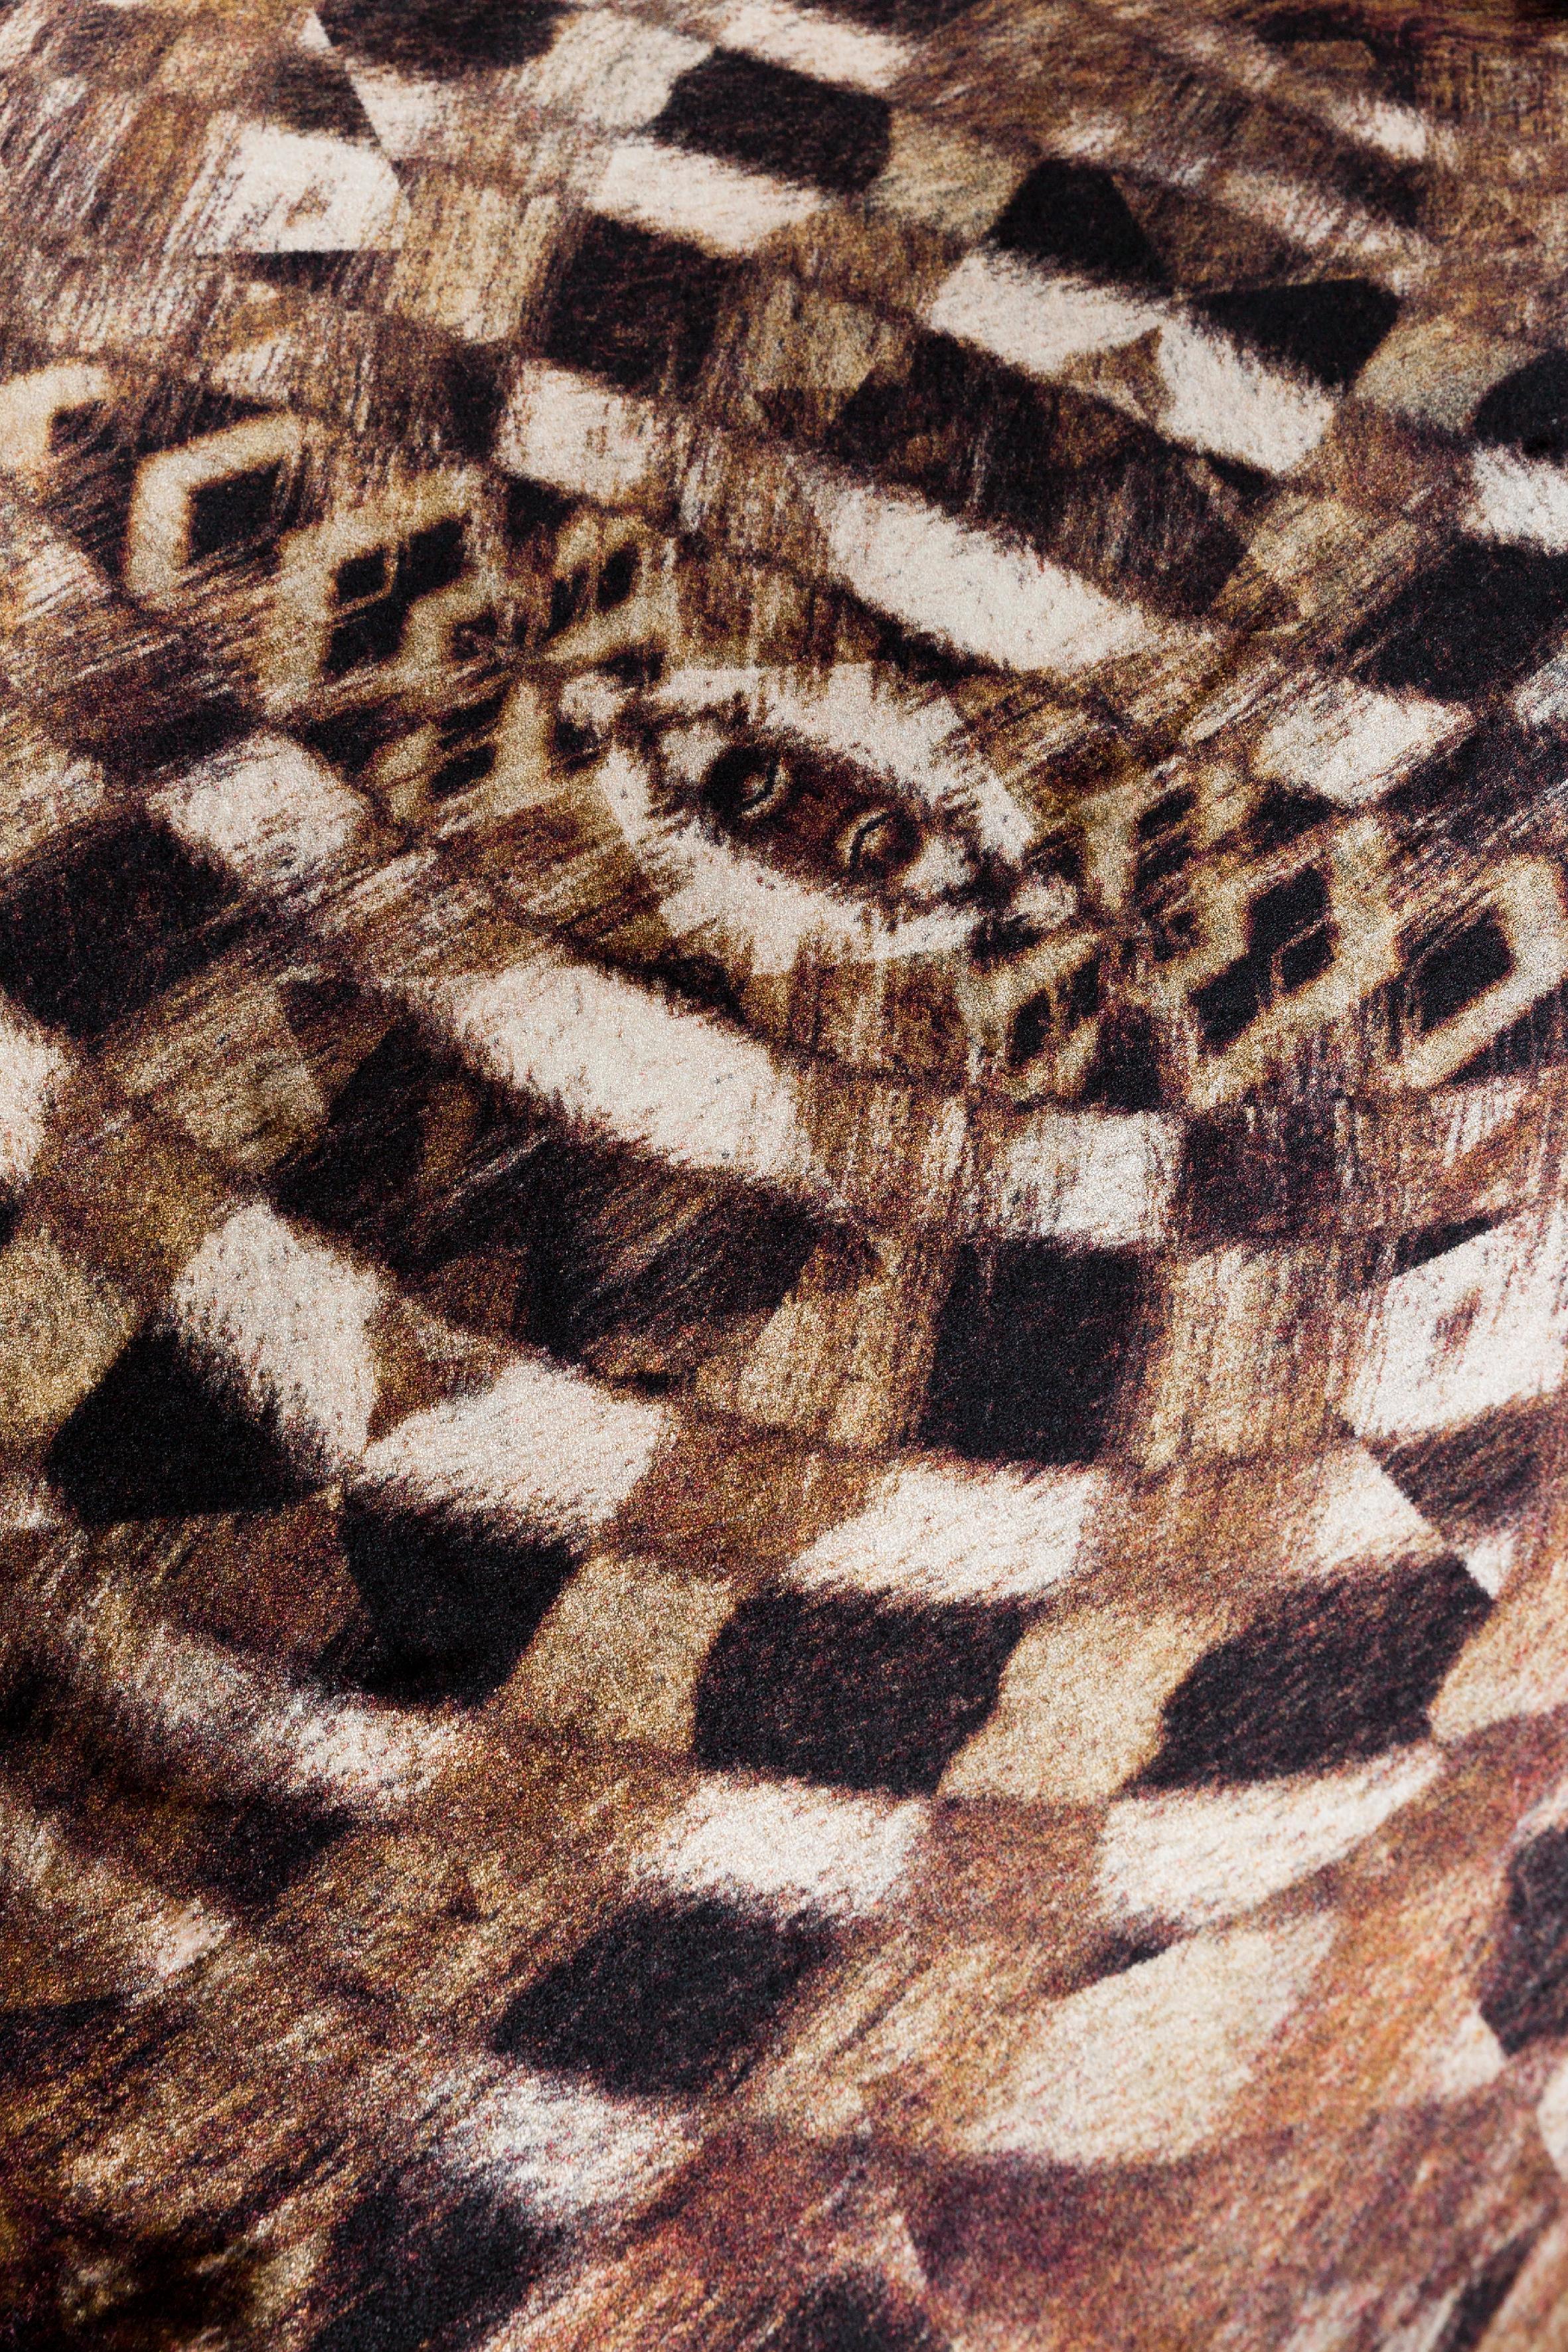 Moooi large extinct animals aristo quagga rug in low pile polyamide.

